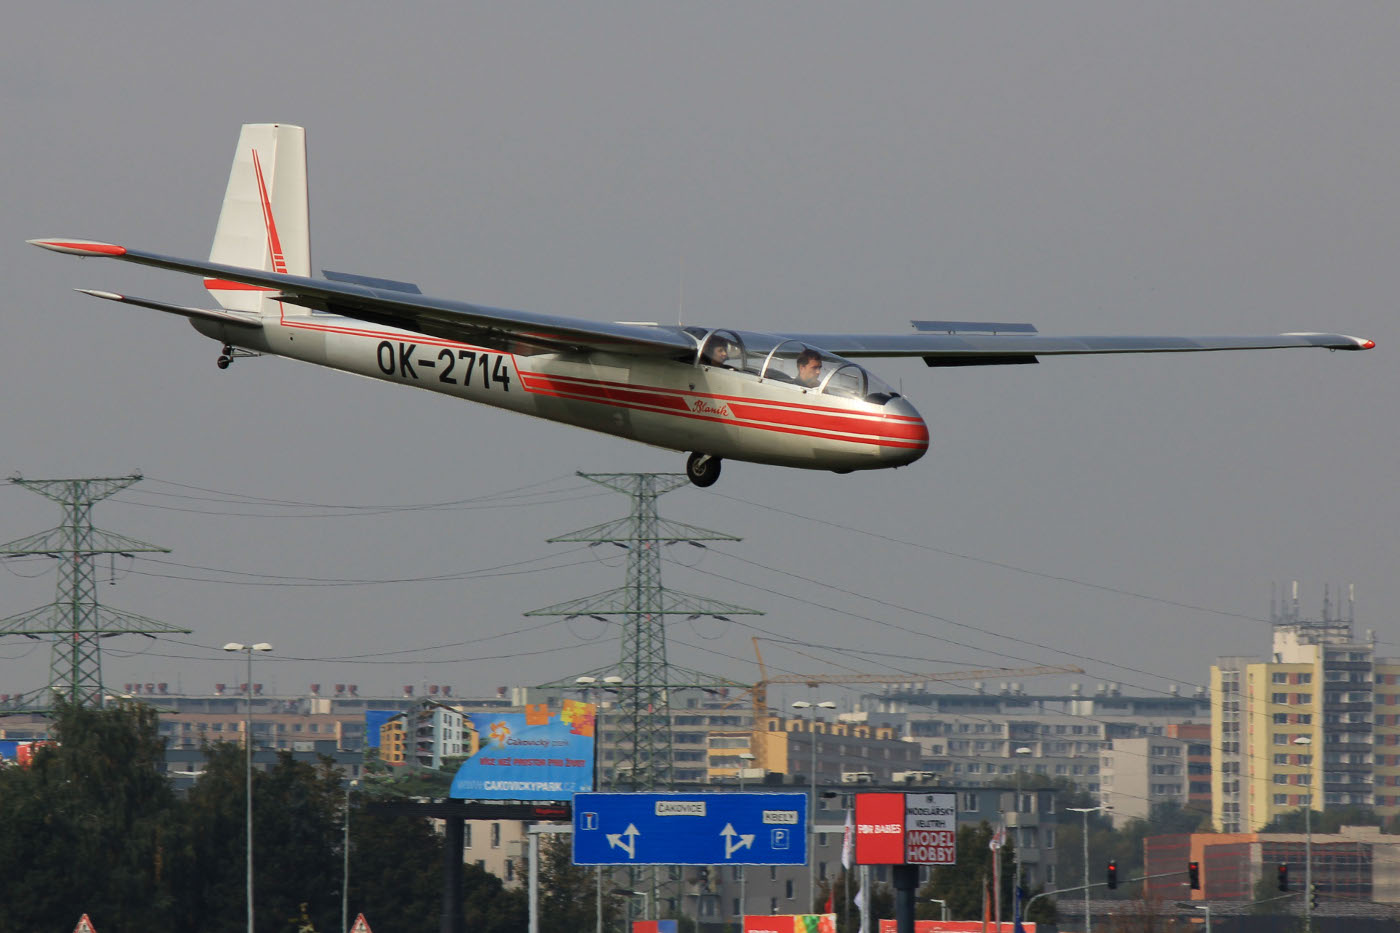 L-13A Blaník (OK-2714)